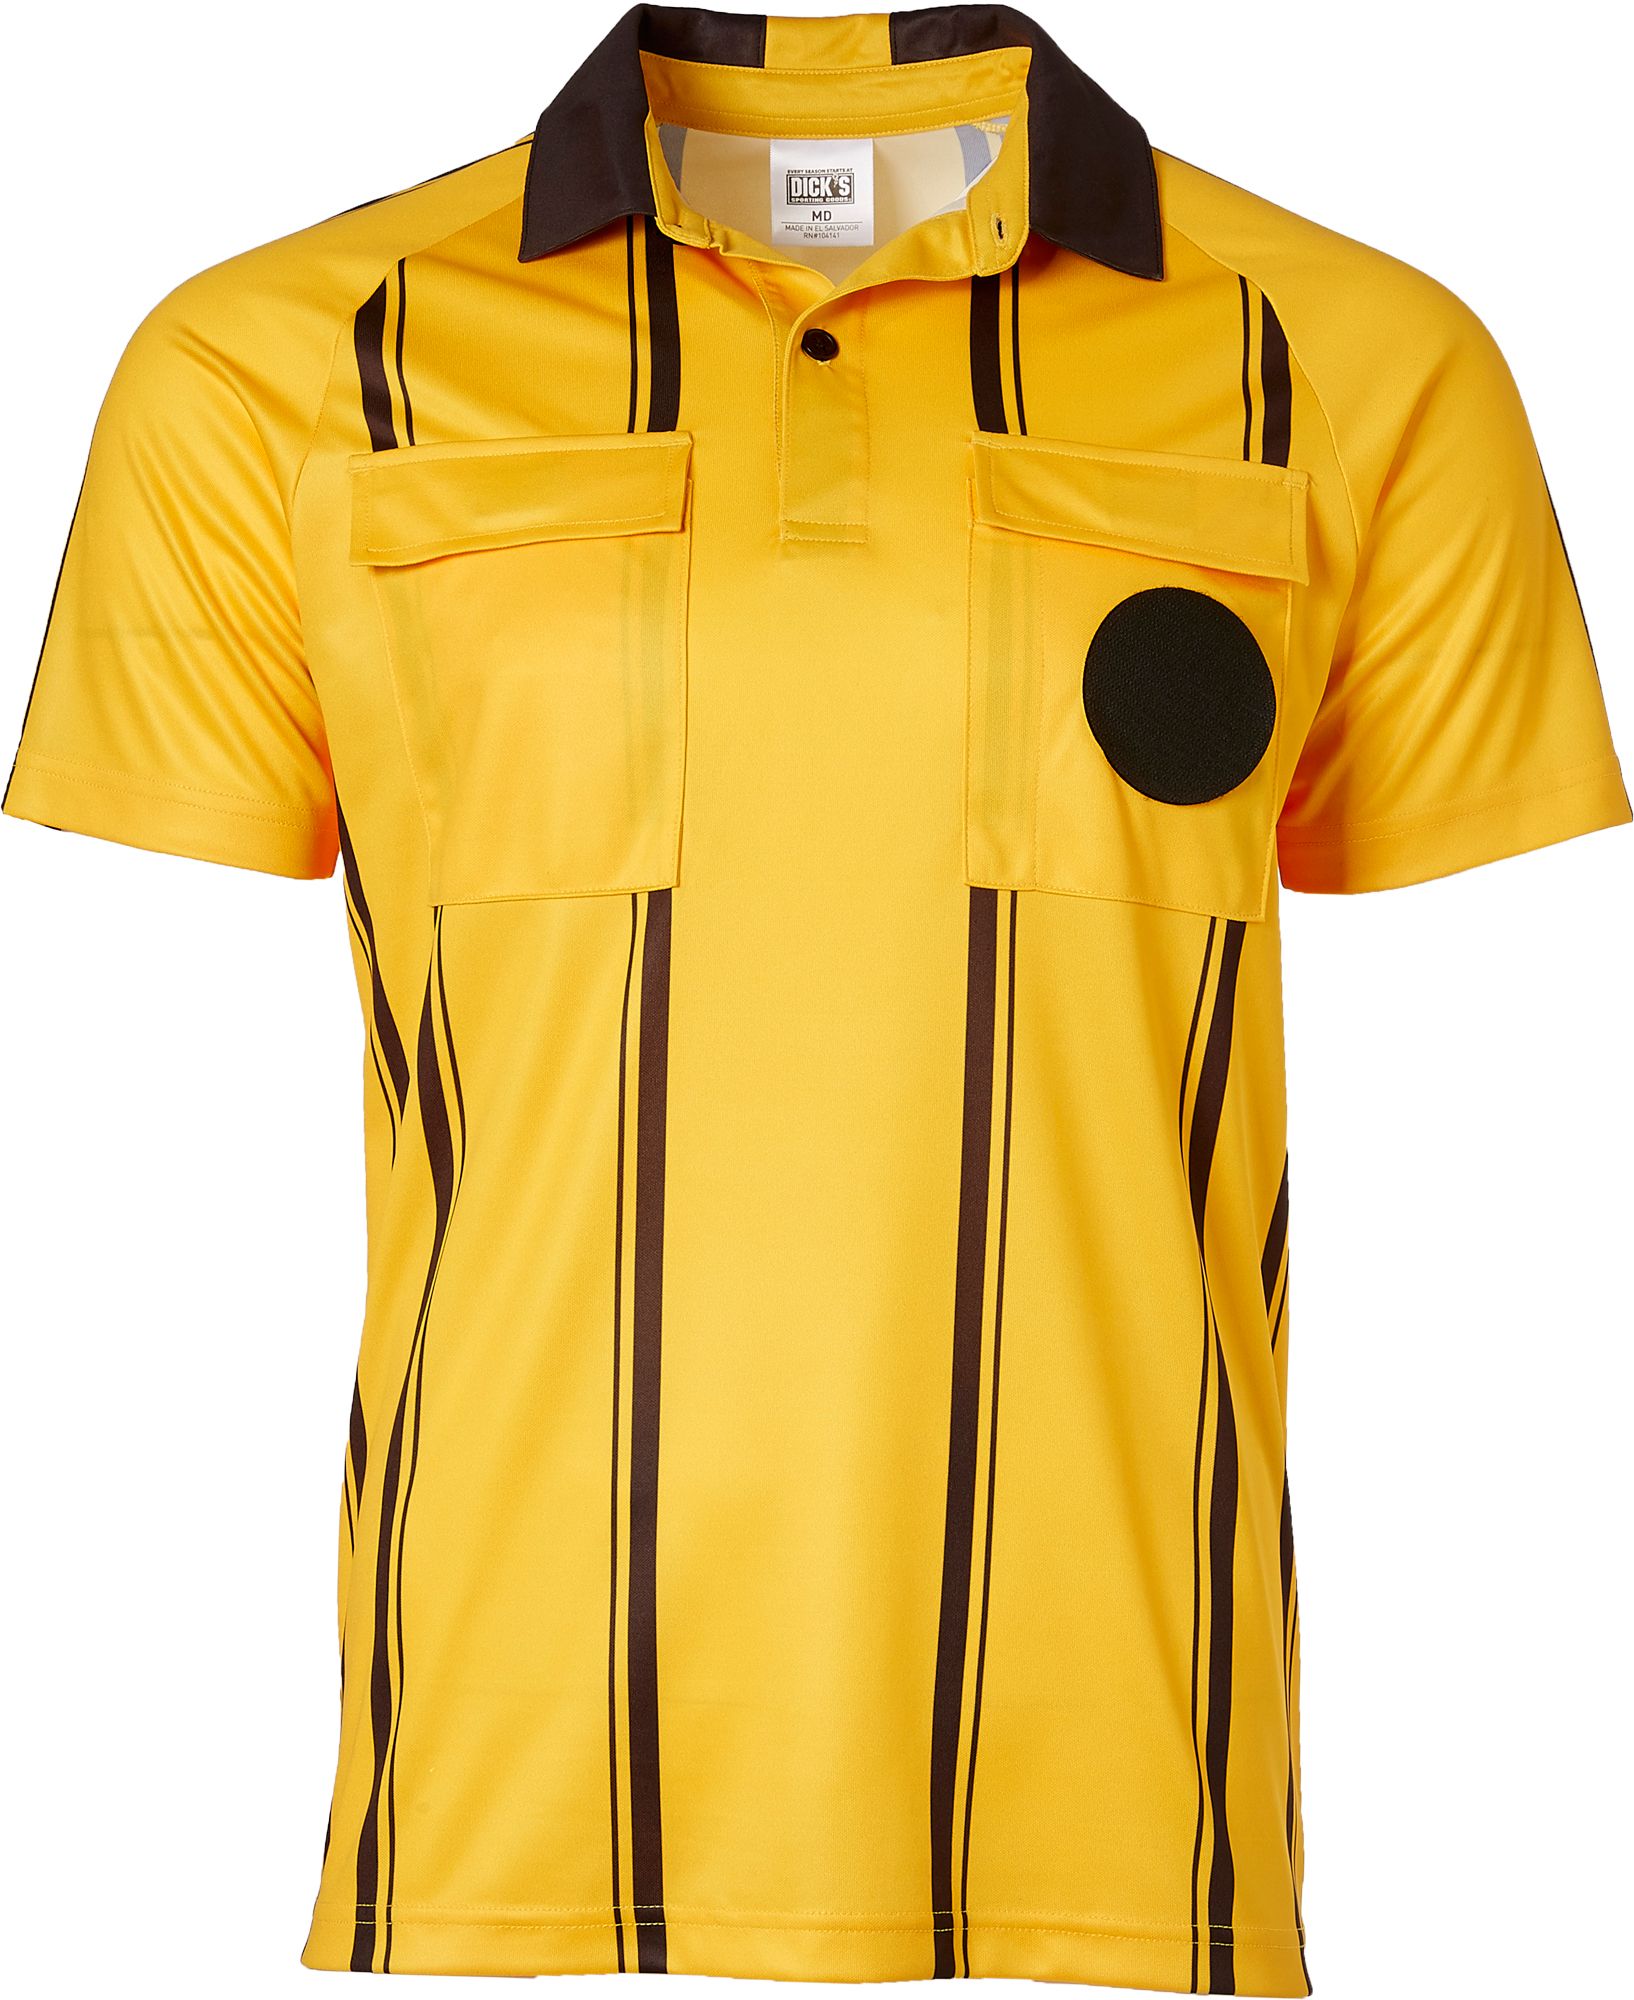 soccer referee shirt